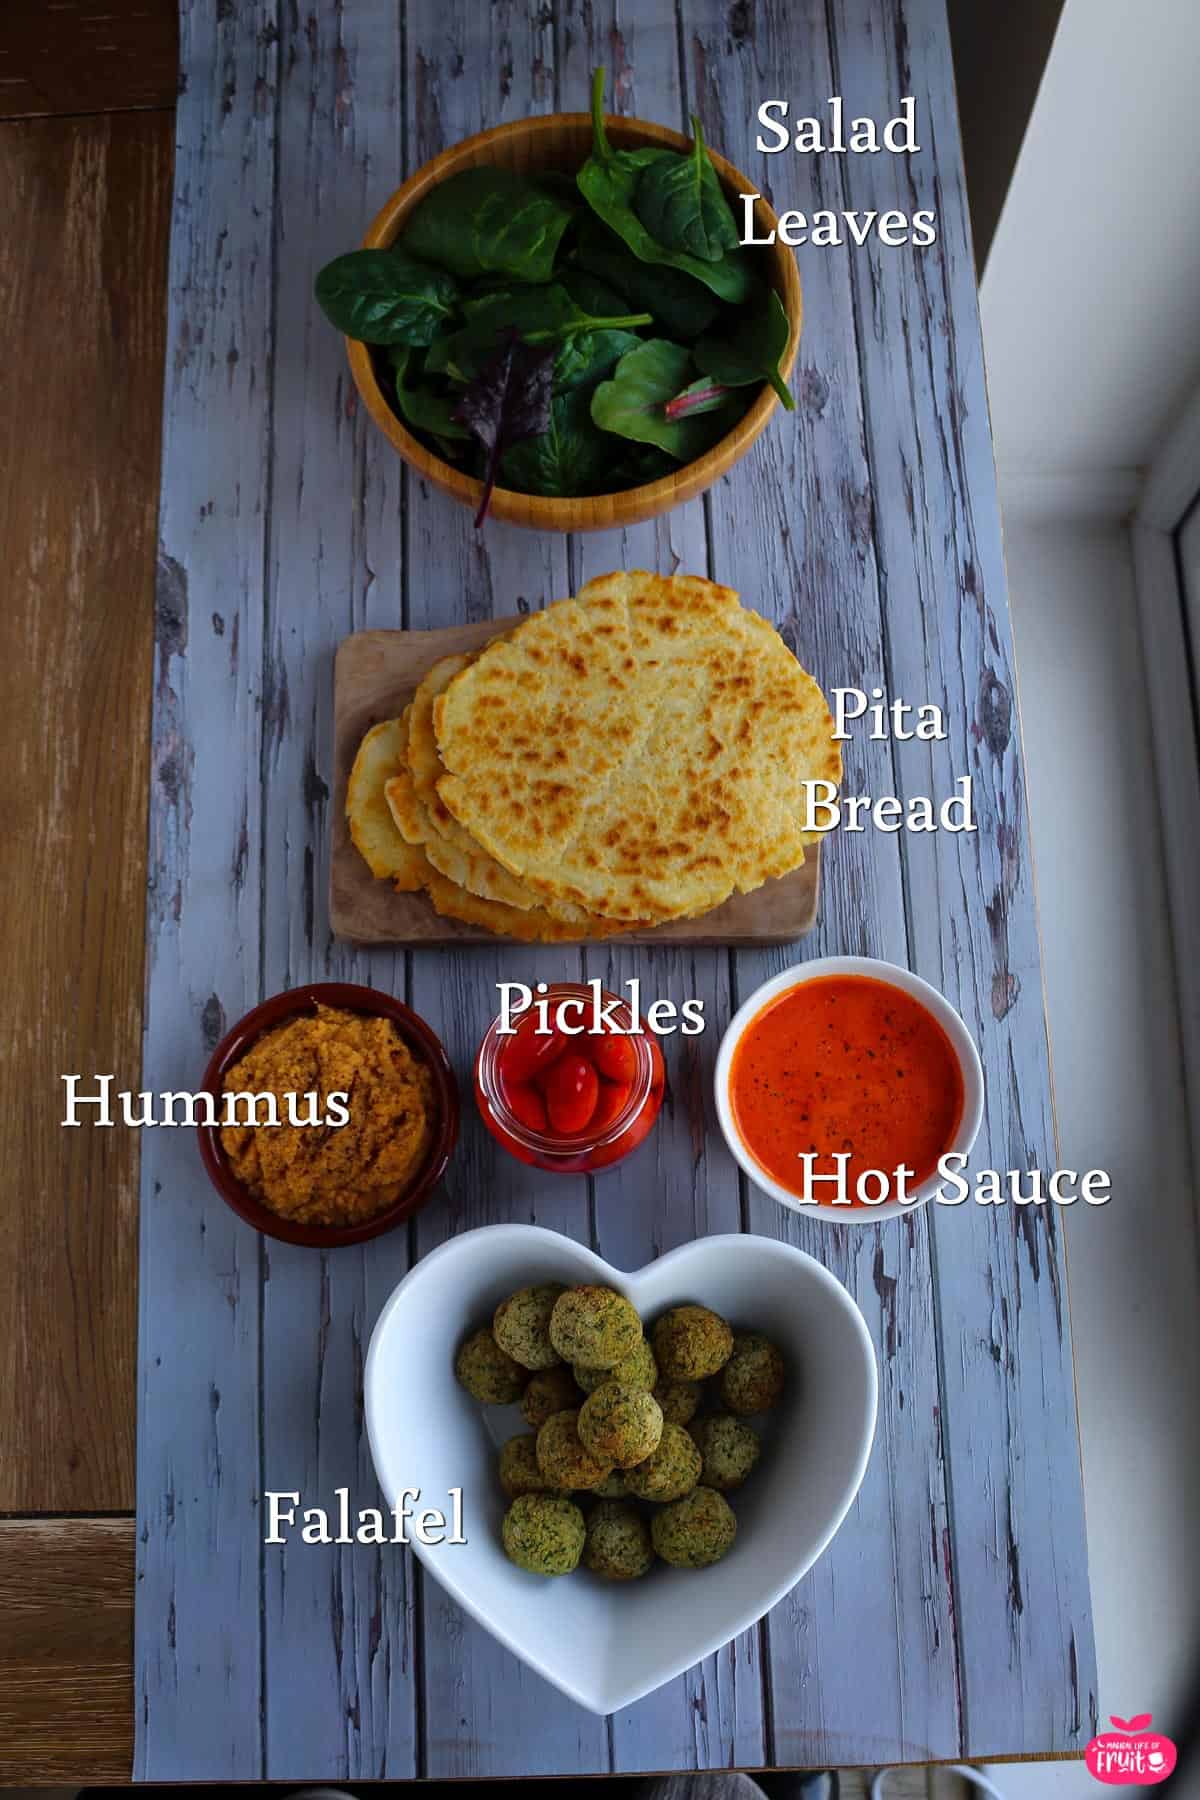 Ingredients for Falafel Gyro Recipe, salad leaves, pita bread, hummus, pickles, hot sauce and falafels.